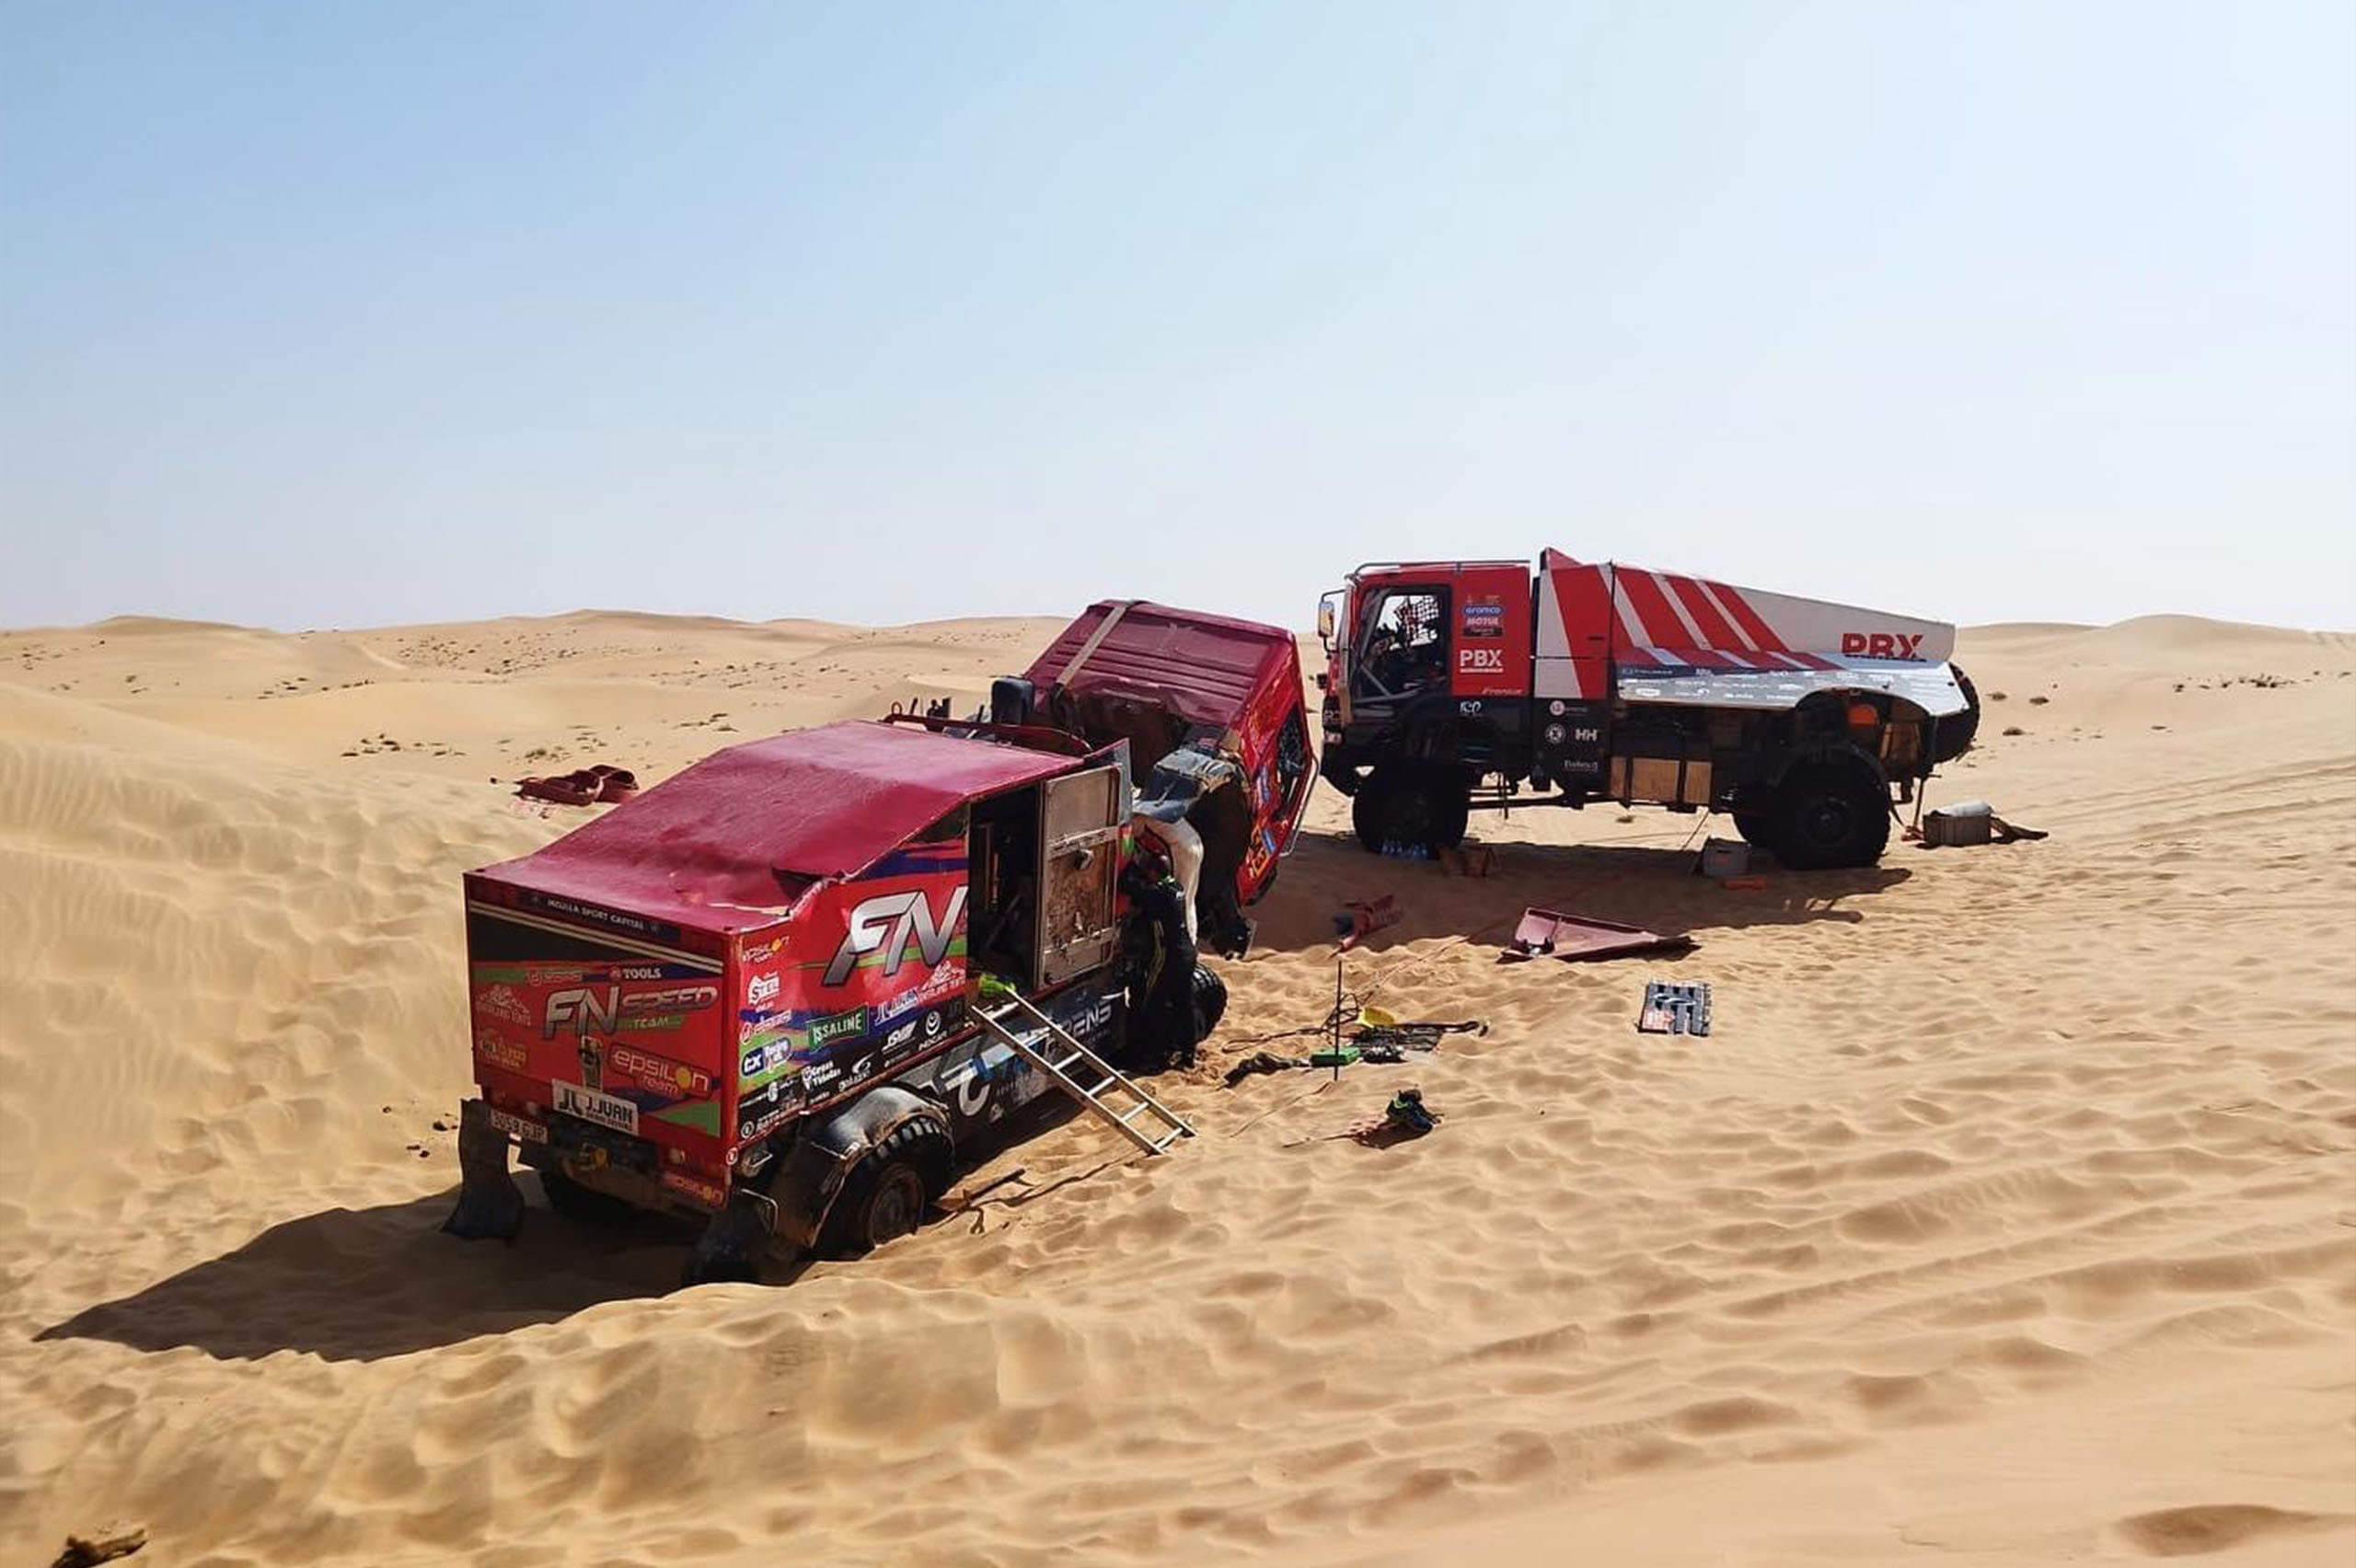 Dunas y arena - camion dakar - camion dunas desierto - pbx dakar team - palibex